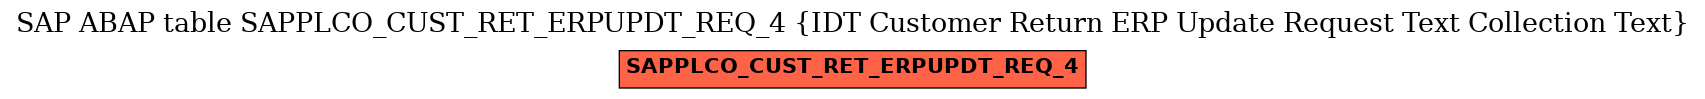 E-R Diagram for table SAPPLCO_CUST_RET_ERPUPDT_REQ_4 (IDT Customer Return ERP Update Request Text Collection Text)